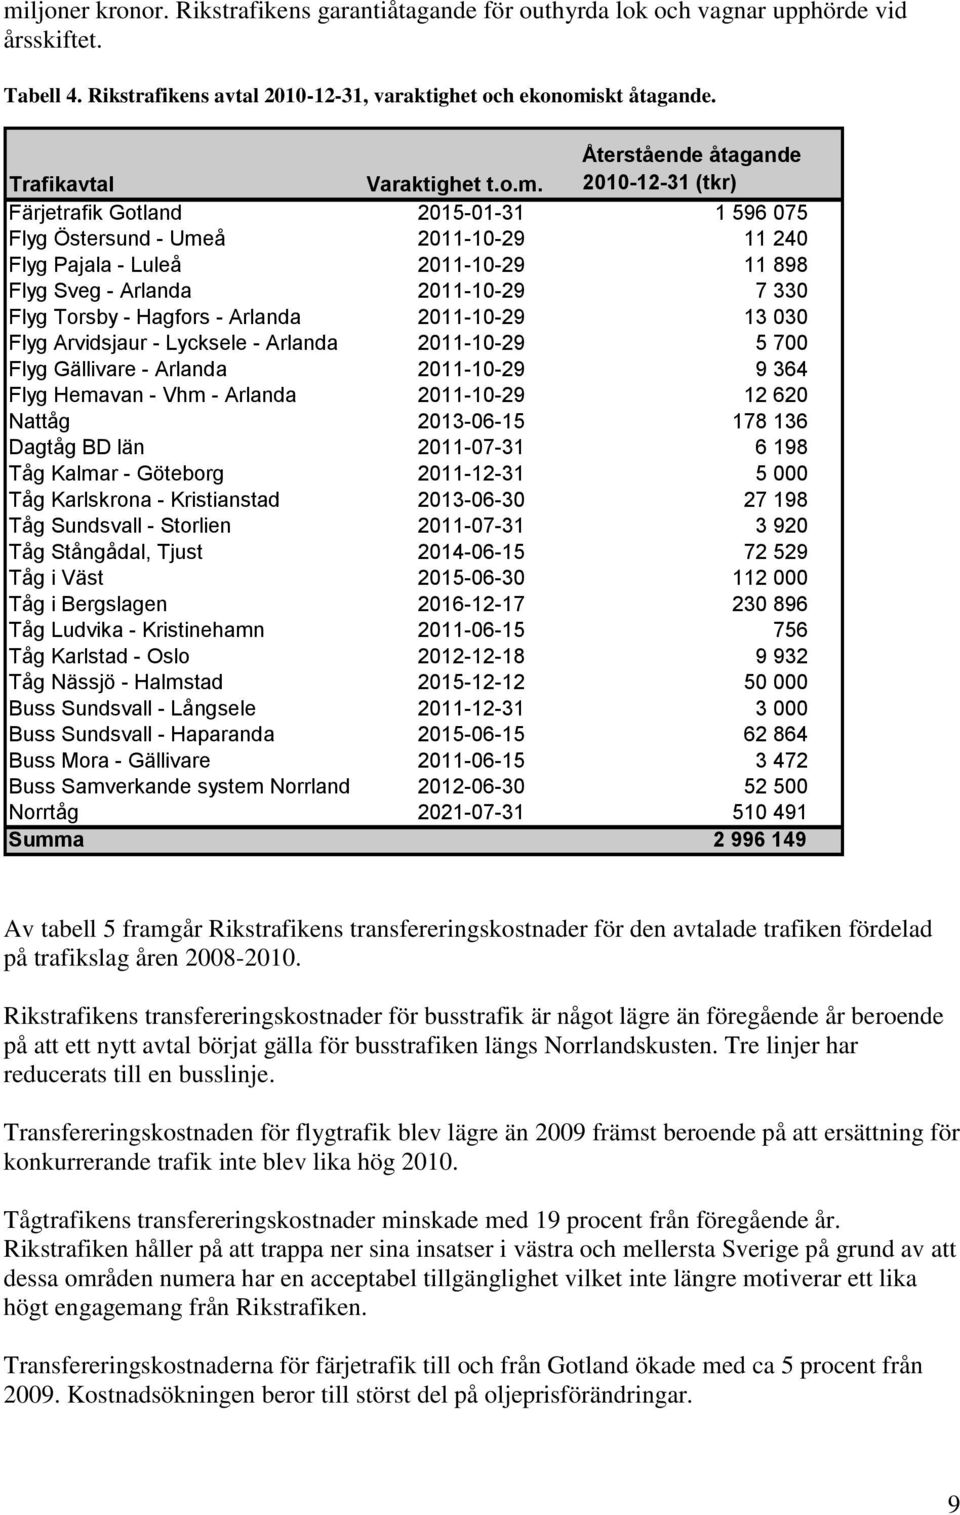 Återstående åtagande 2010-12-31 (tkr) Färjetrafik Gotland 2015-01-31 1 596 075 Flyg Östersund - Umeå 2011-10-29 11 240 Flyg Pajala - Luleå 2011-10-29 11 898 Flyg Sveg - Arlanda 2011-10-29 7 330 Flyg